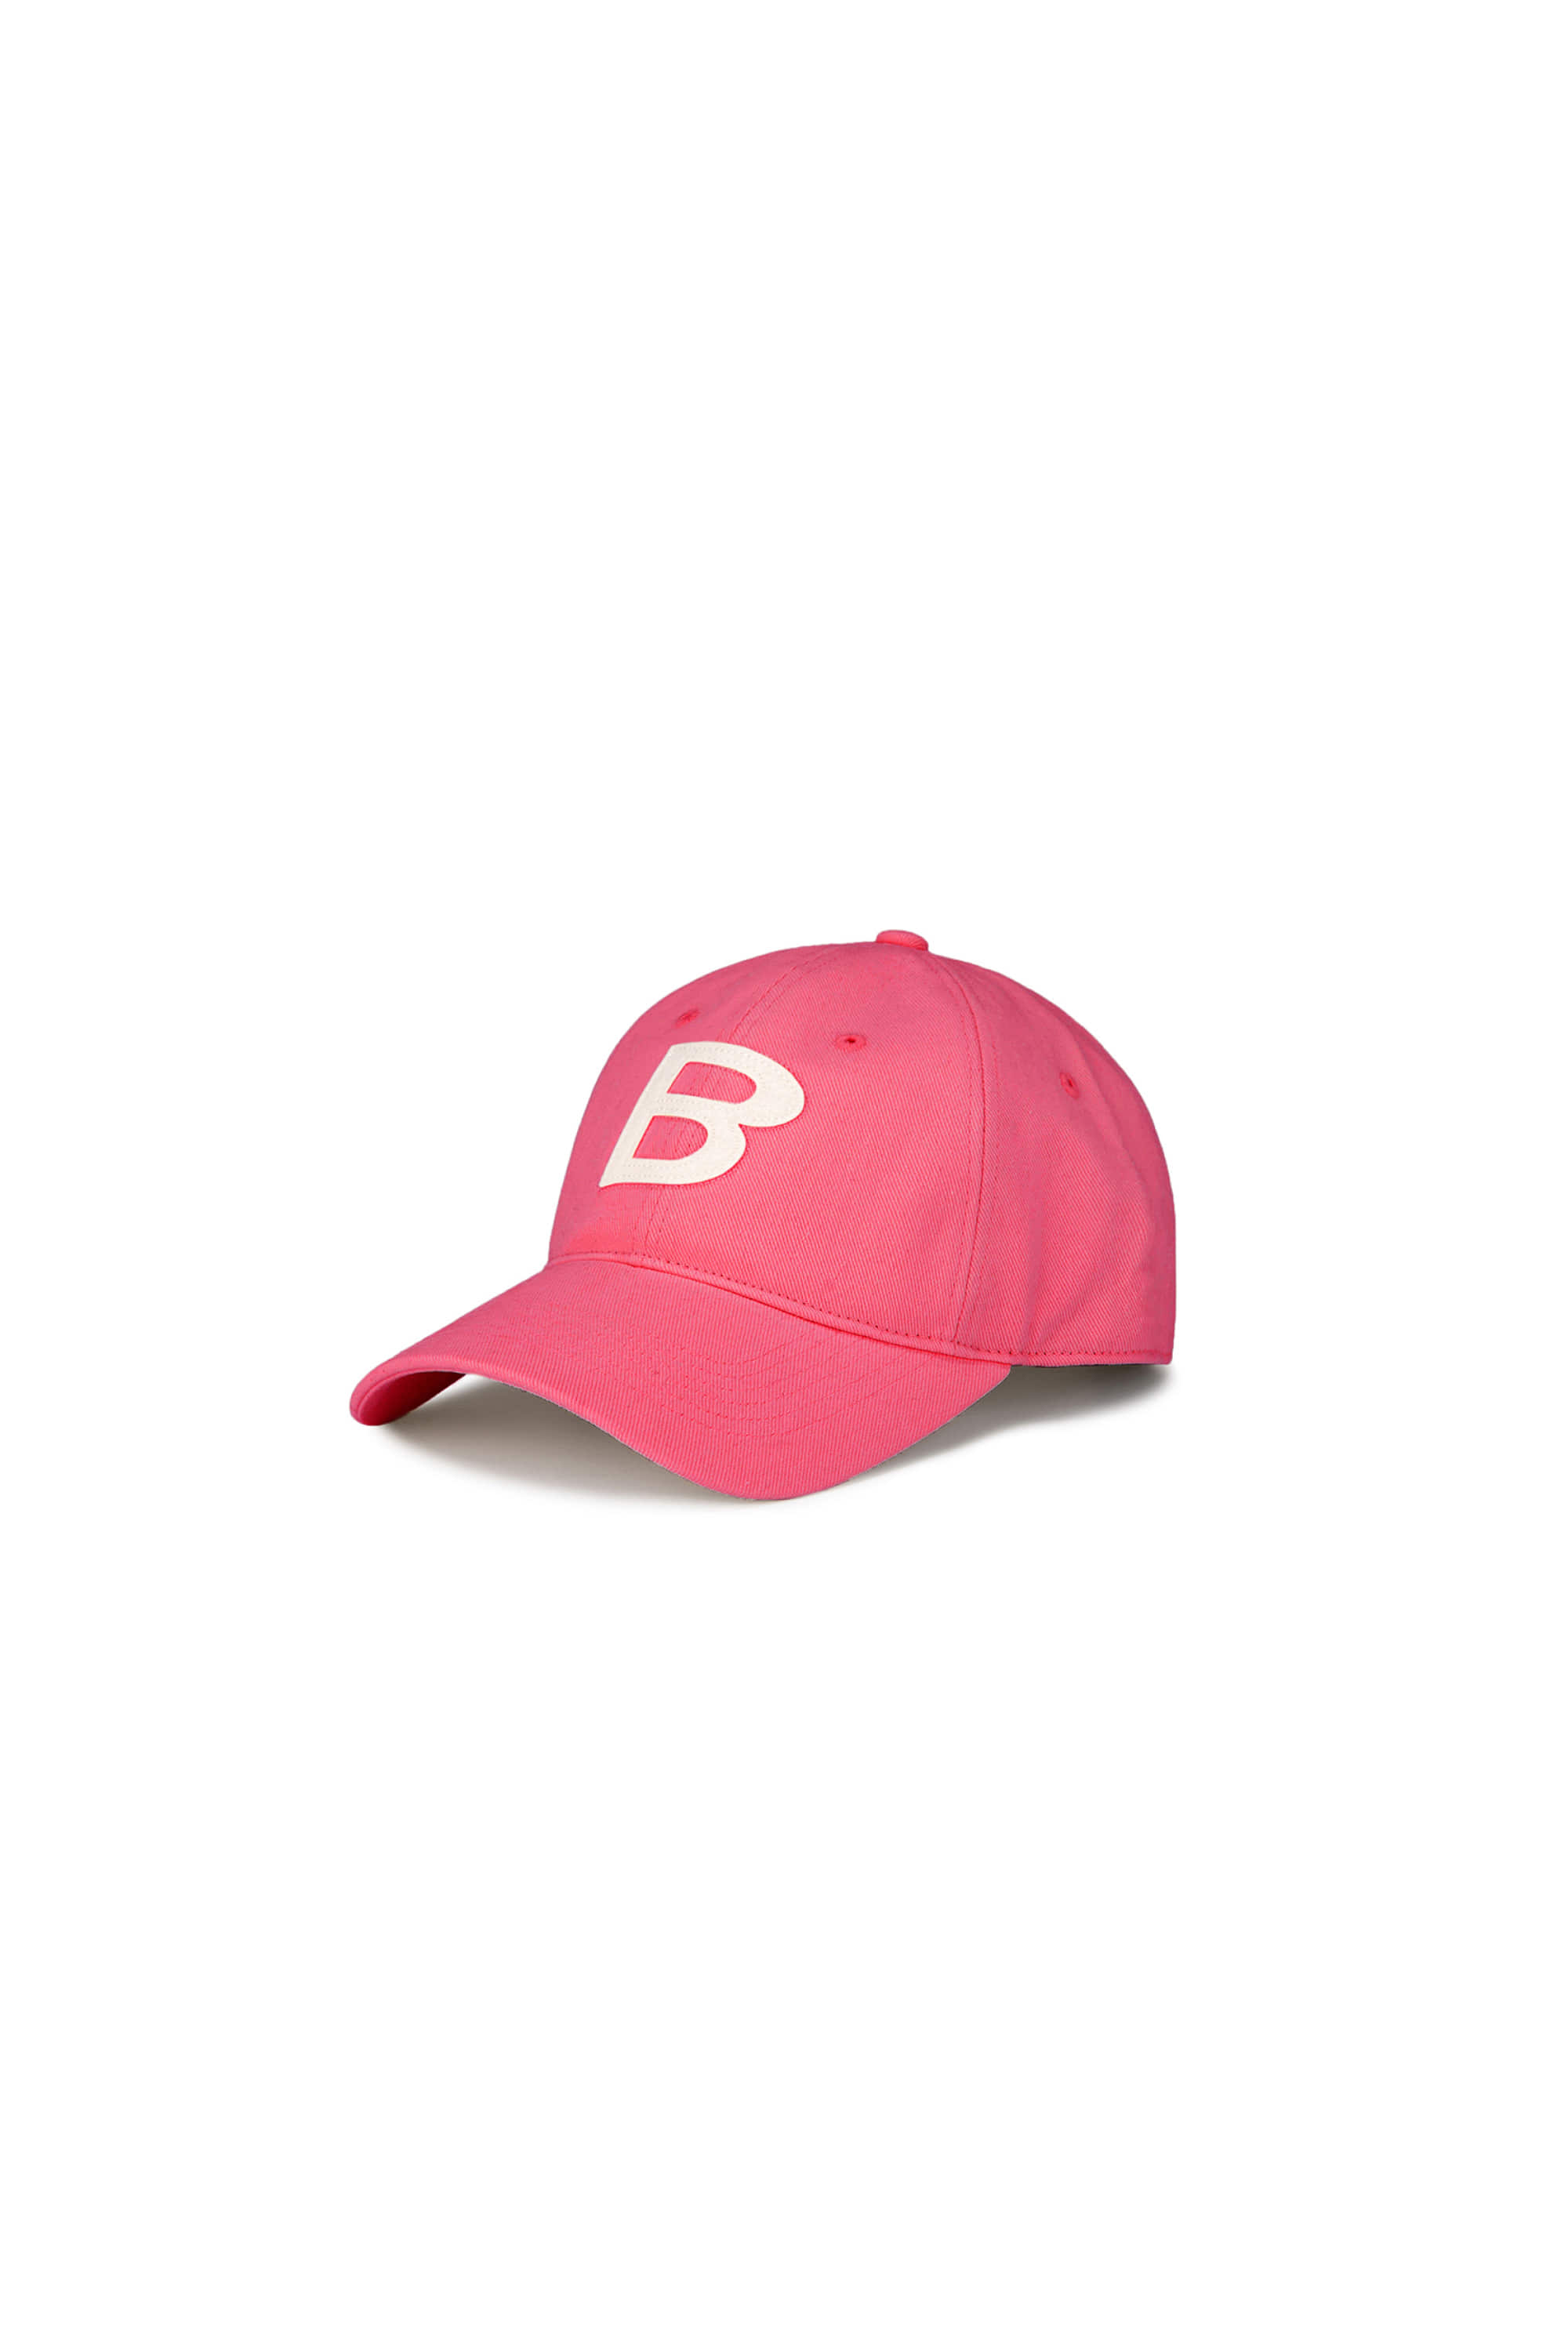 B PATCH CAP - PINK